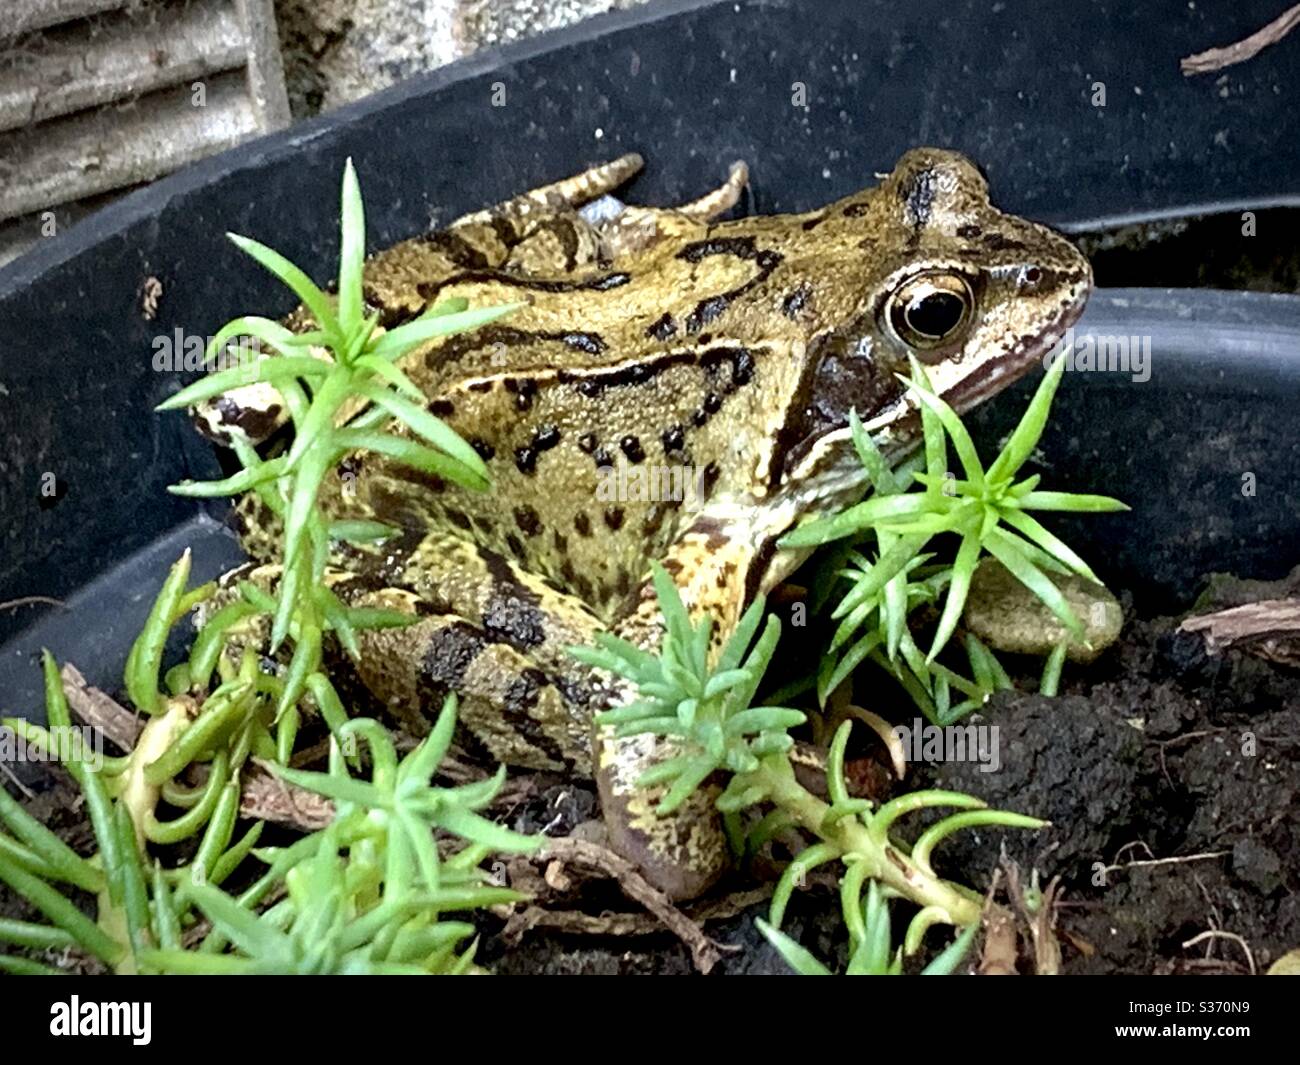 My garden friend the frog. Stock Photo